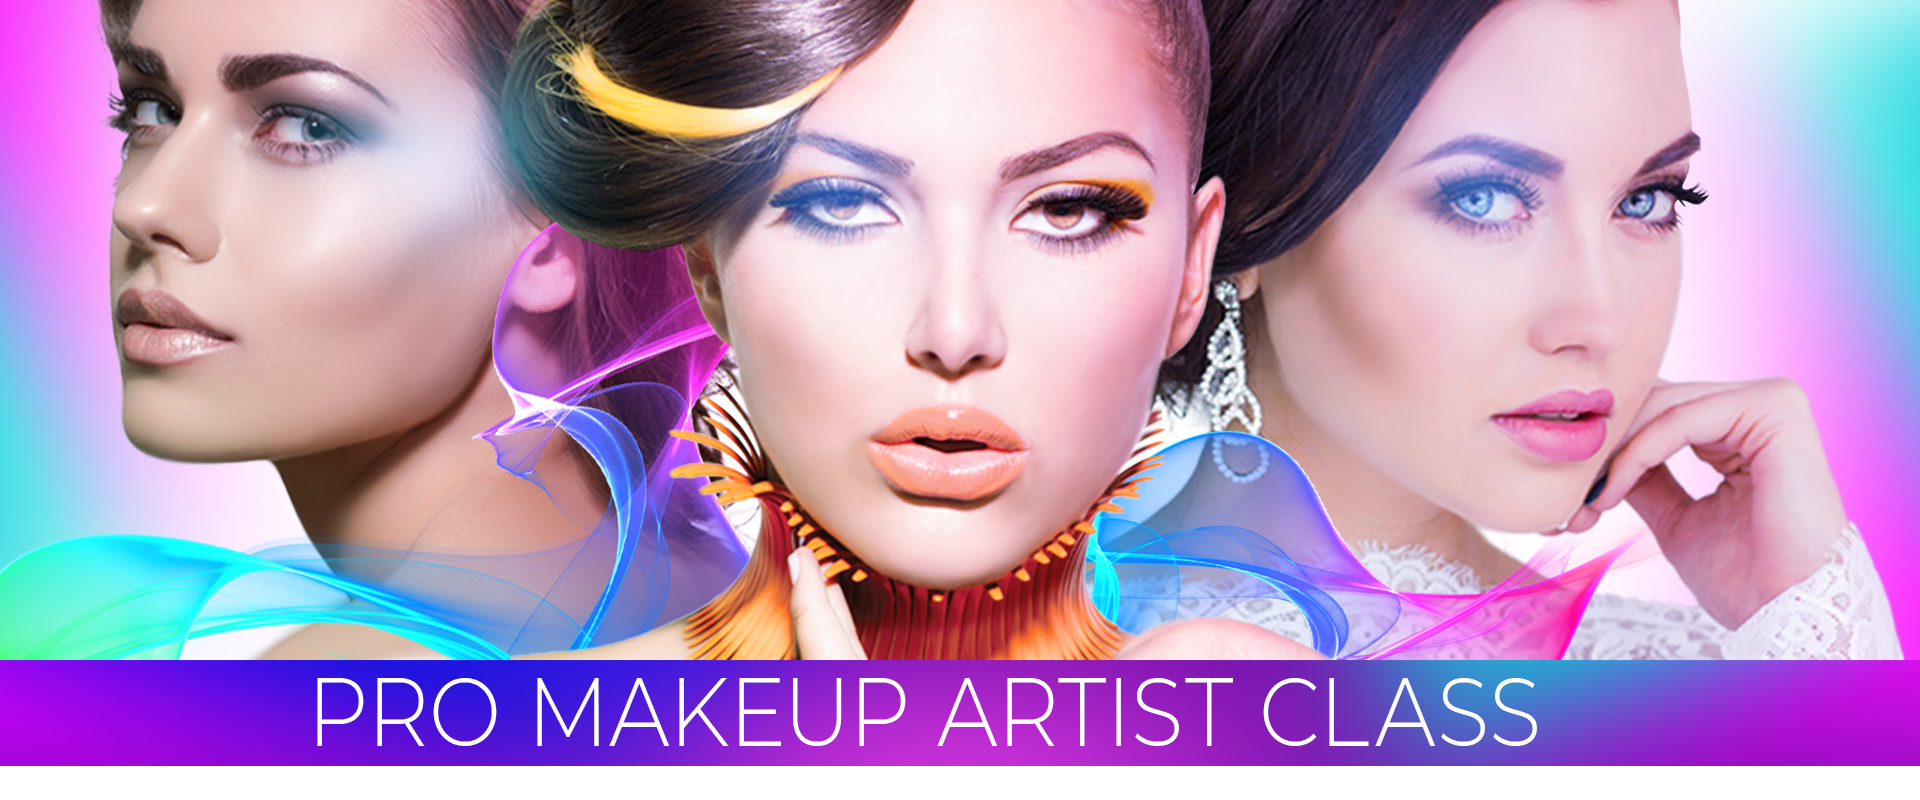 Certified Advanced Makeup Artist Course